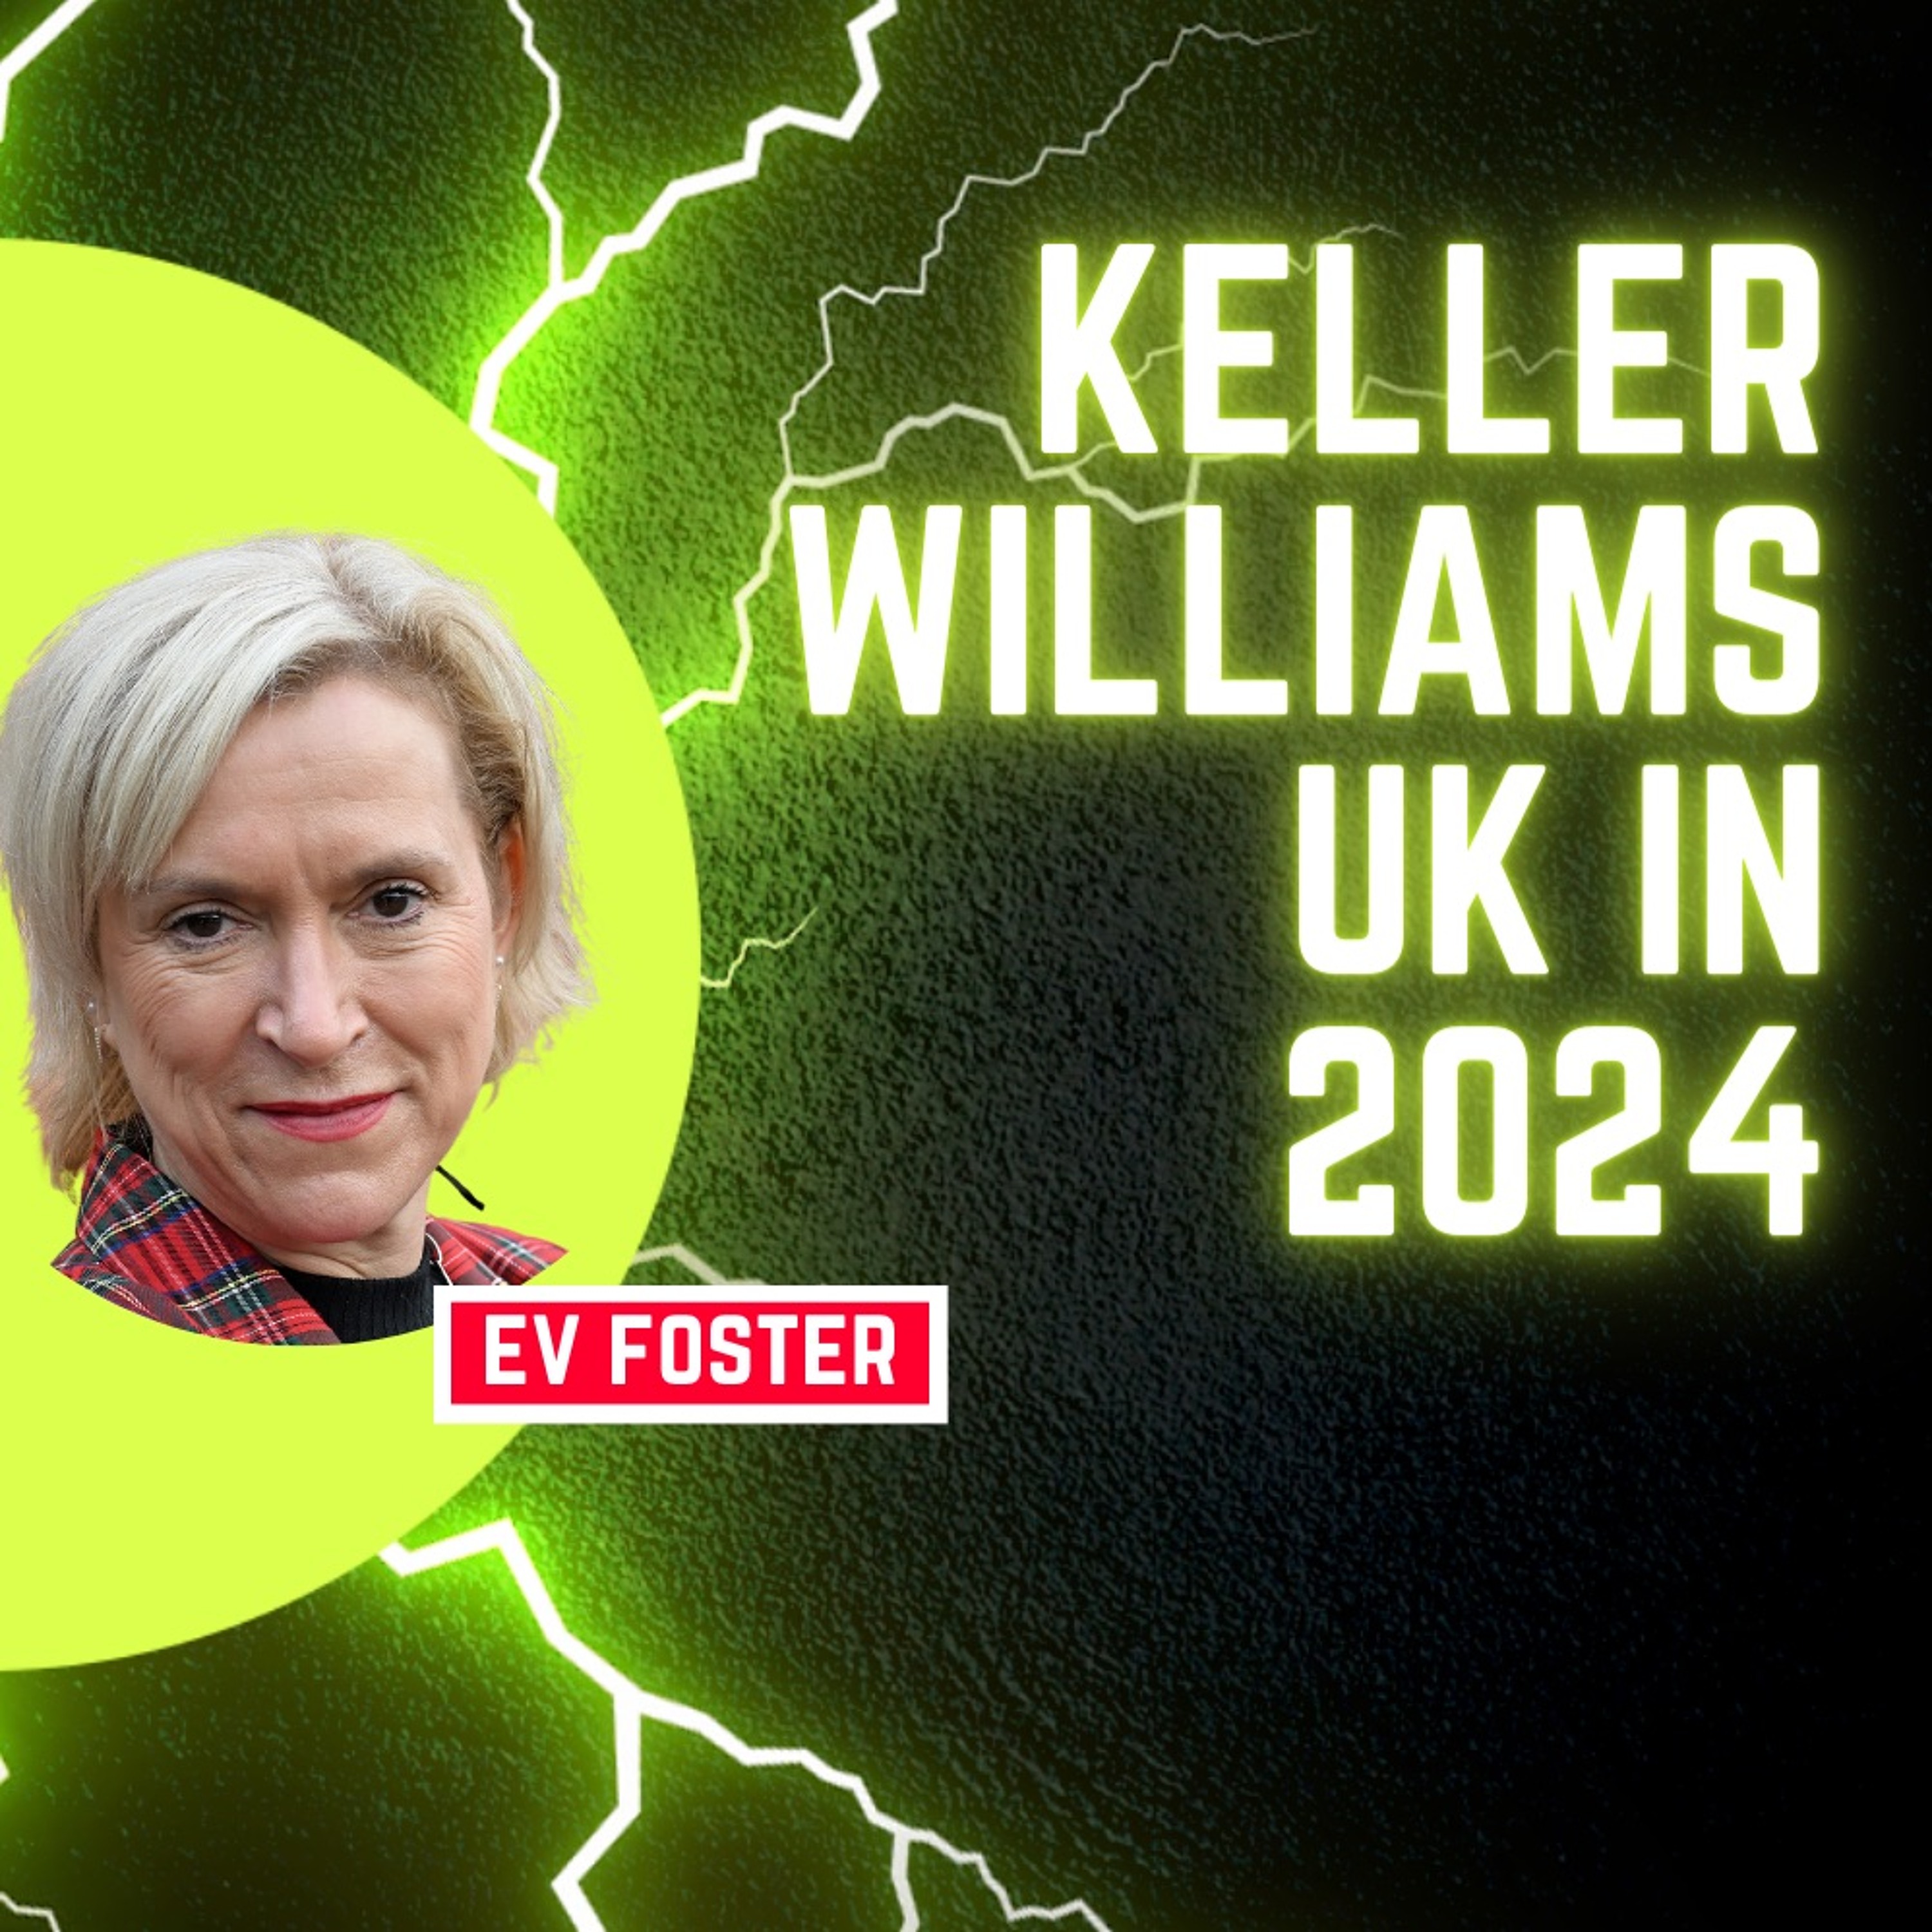 Keller Williams UK In 2024 - Ep. 1841